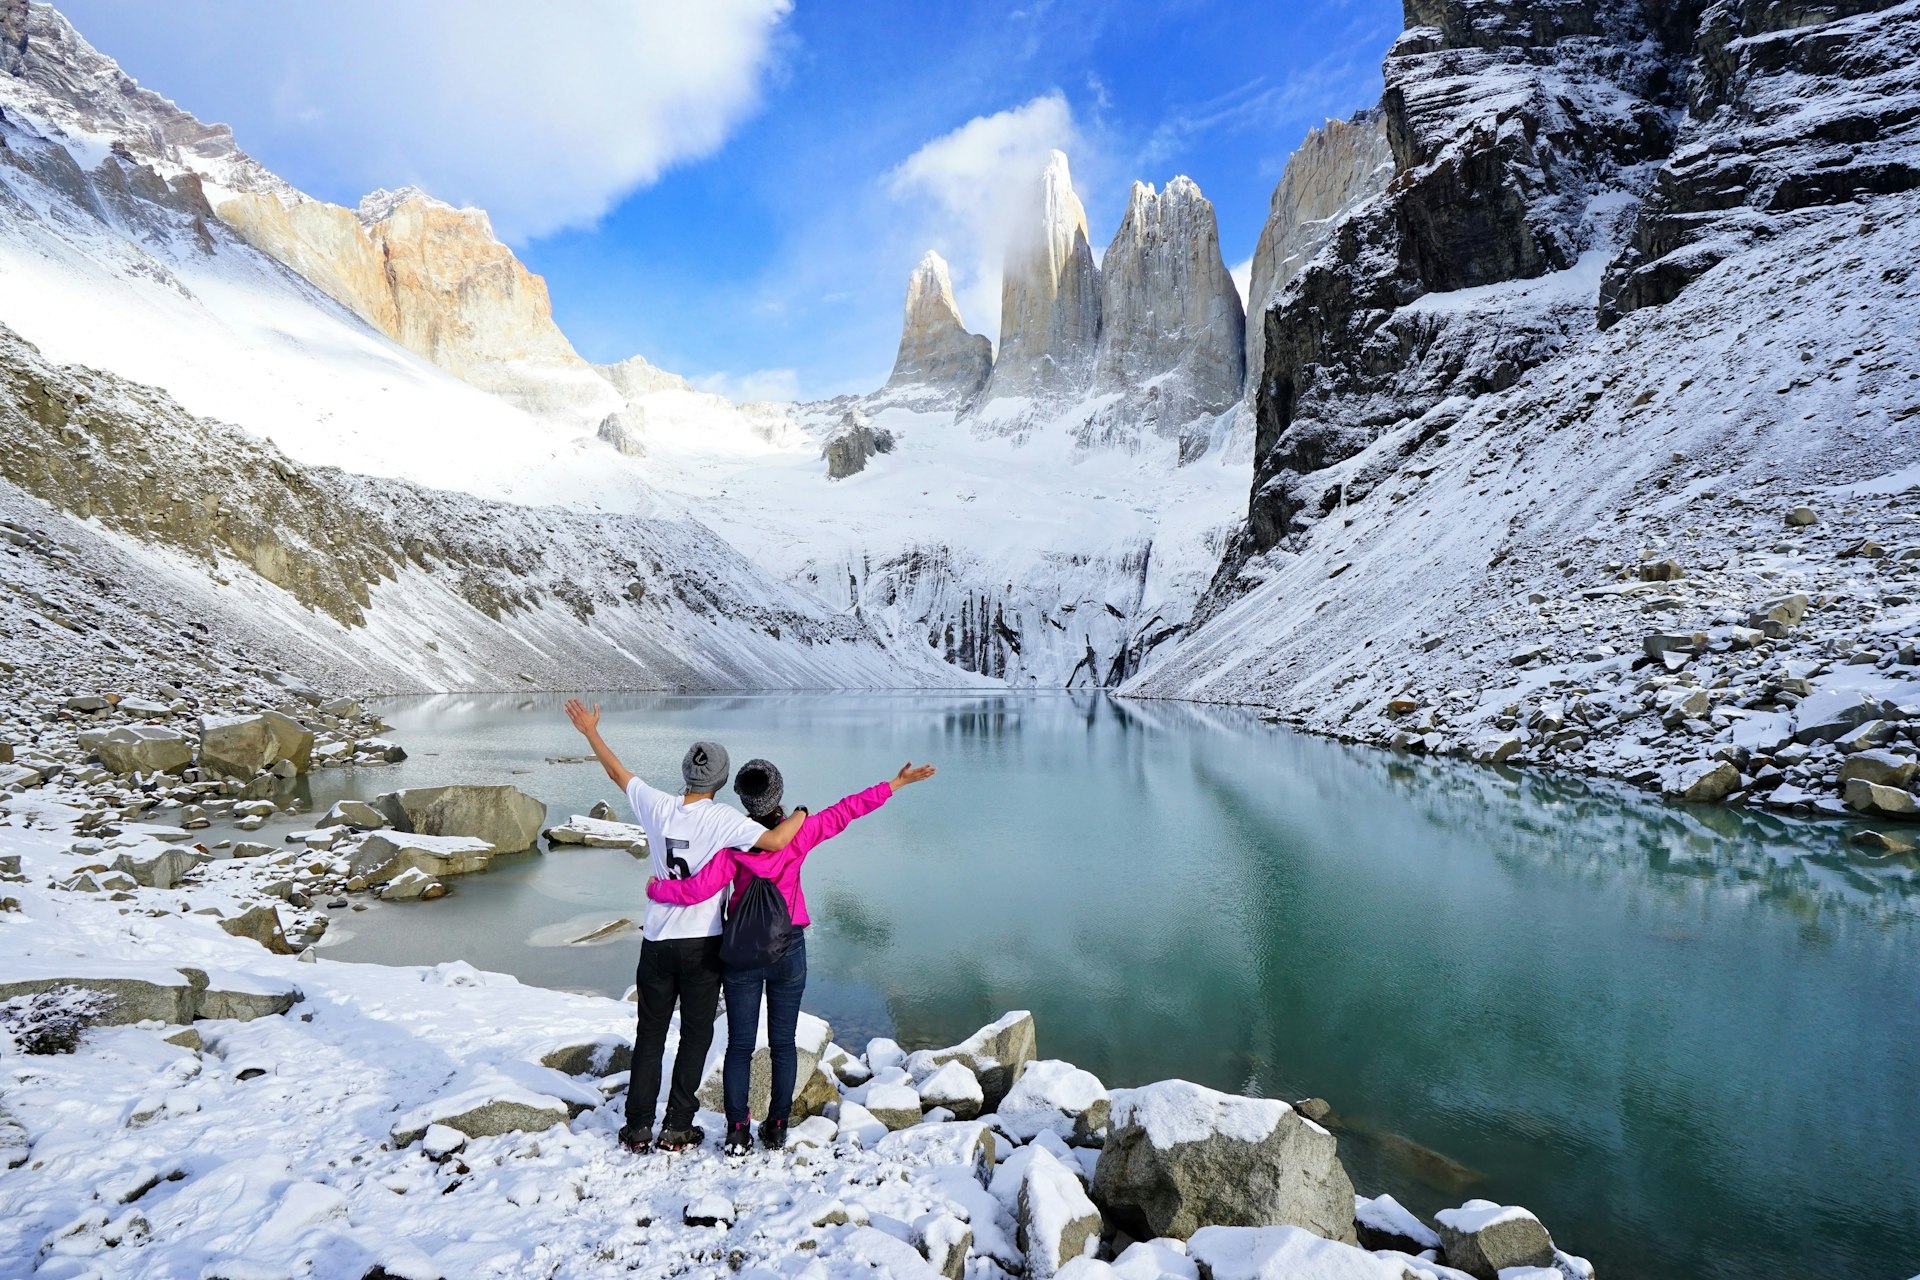  Couple admiring scenery at Mirador Las Torres, Parque Nacional Torres del Paine, Patagonia, Chile